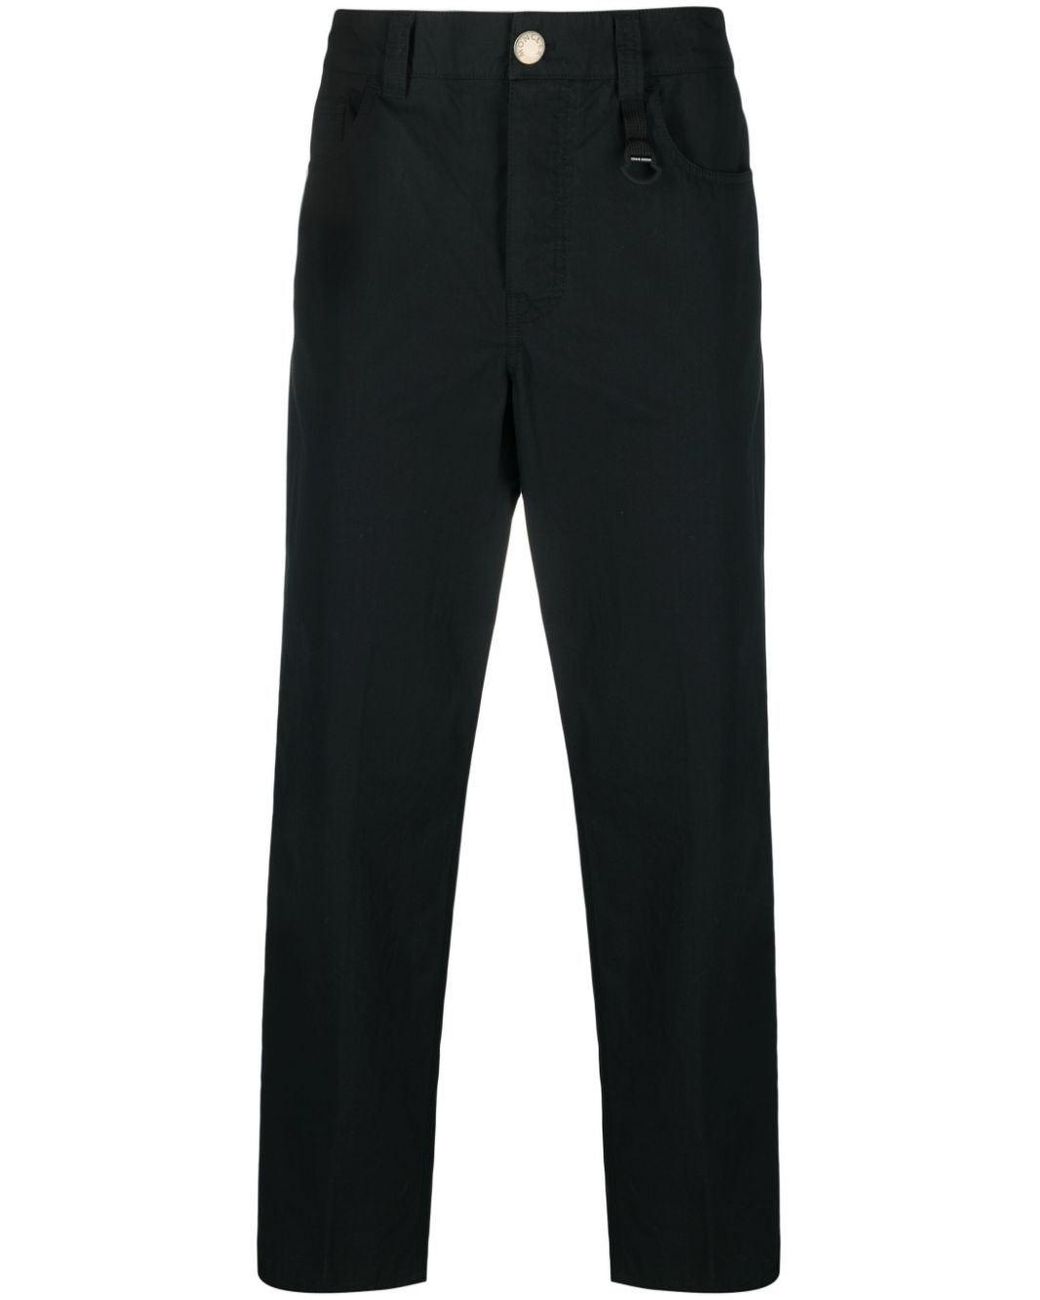 Moncler Genius Trouser Pants Craig Green in Black for Men | Lyst